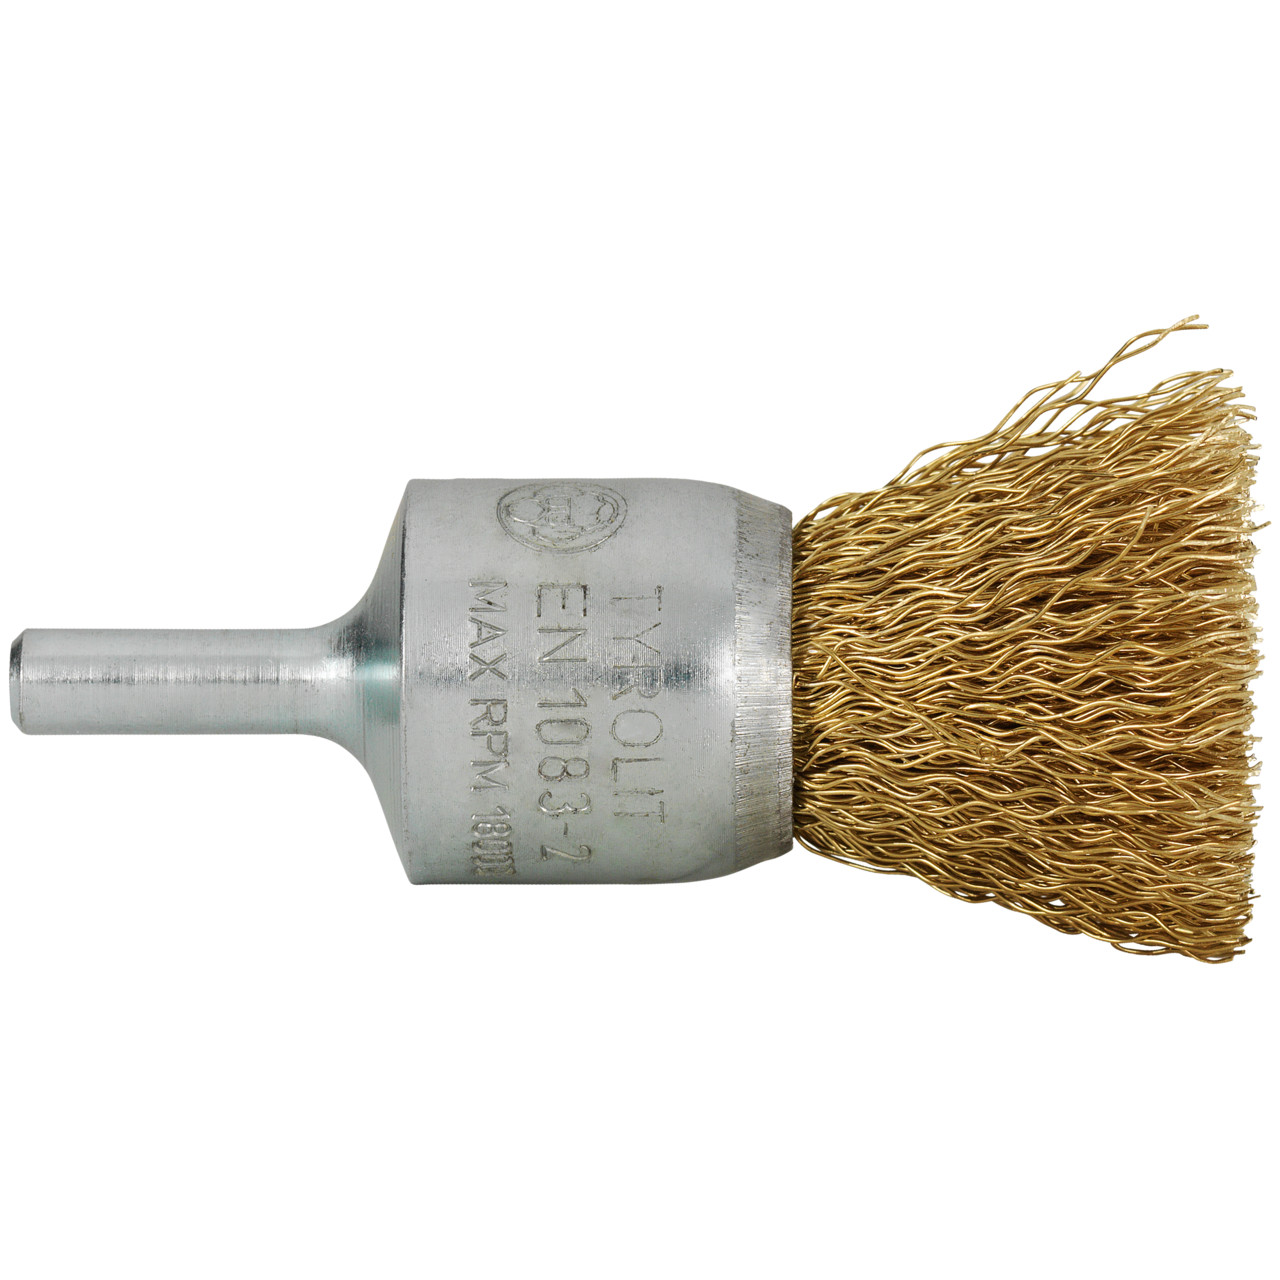 Tyrolit Brush brushes DxH-GExI 12x20-6x60 For non-ferrous metals, shape: 52PDW - (brush brushes), Art. 890658